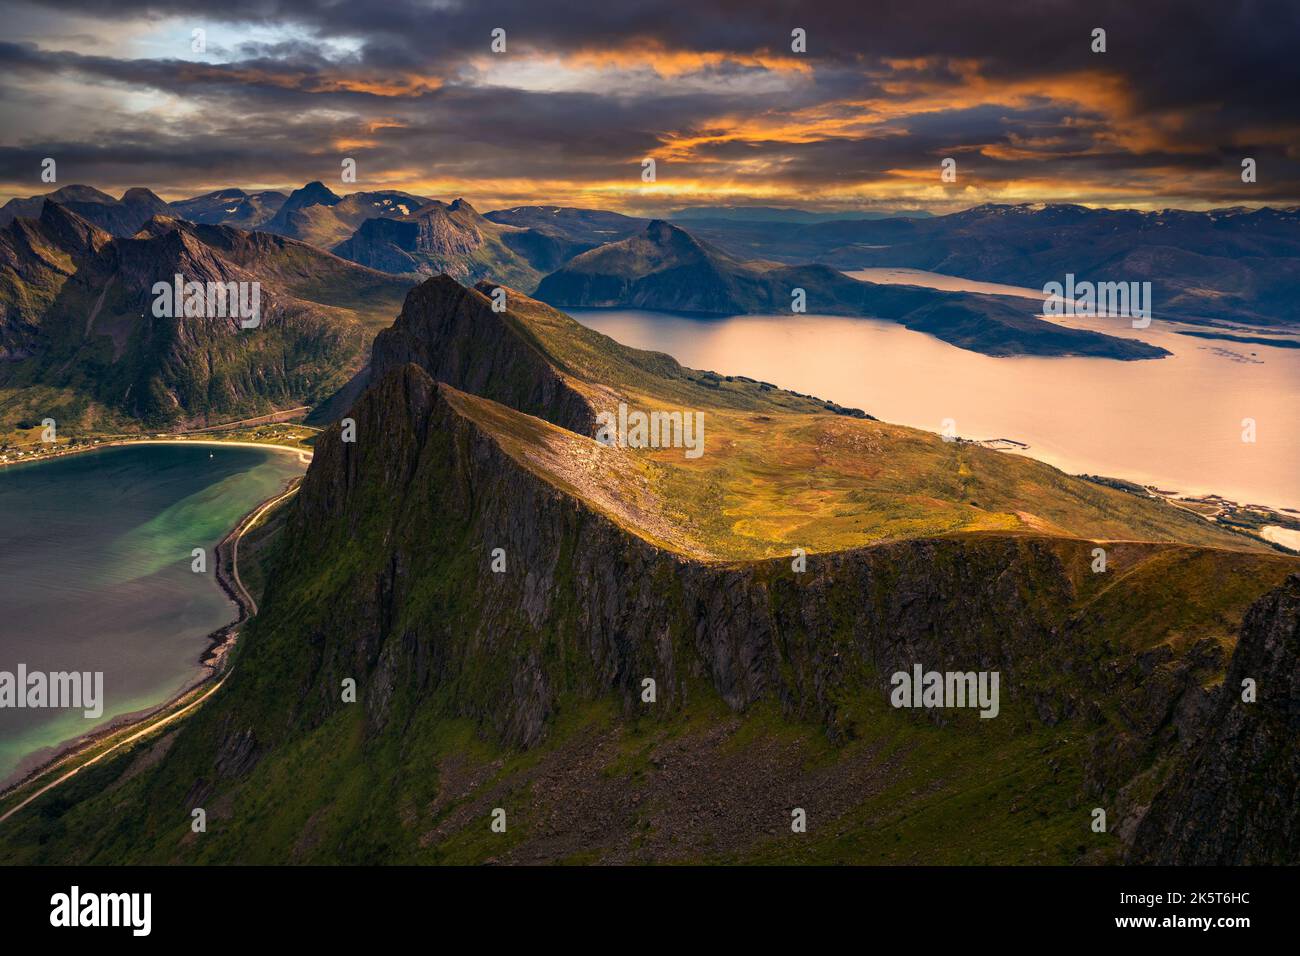 Sonnenuntergang über dem Berg Husfjellet auf der Insel Senja im Norden Norwegens Stockfoto